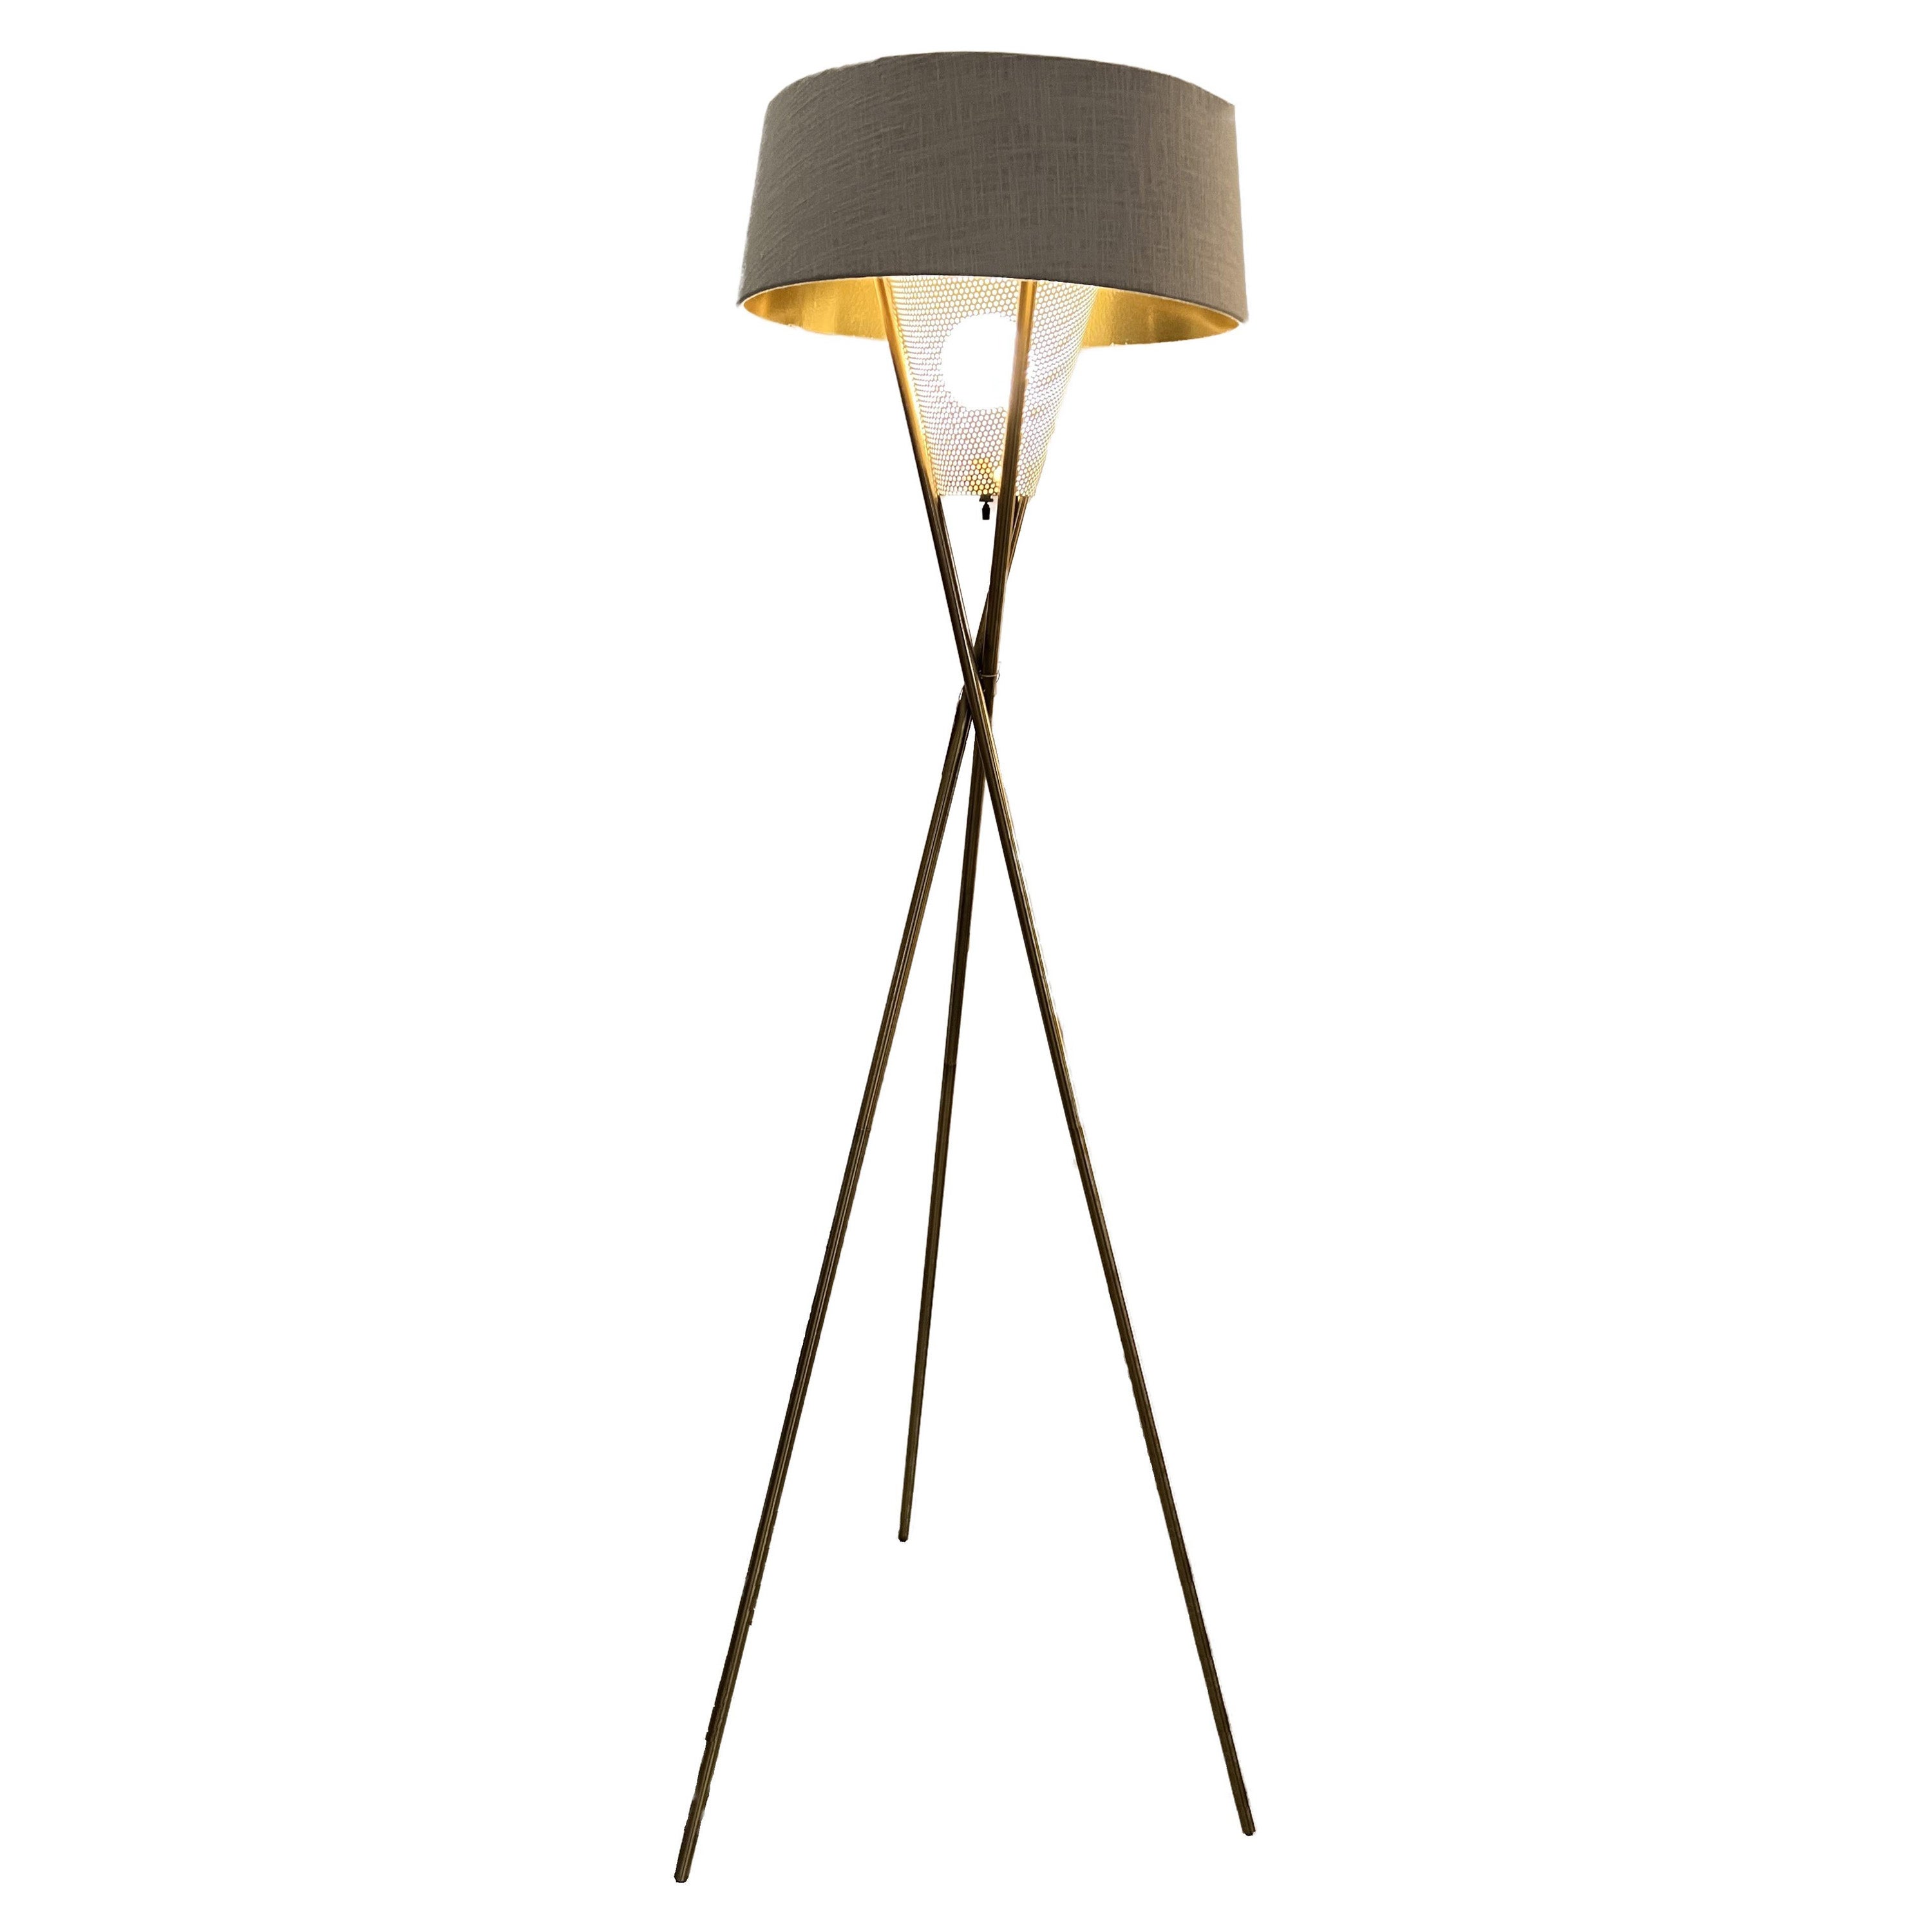 French 1960s Floor Lamp